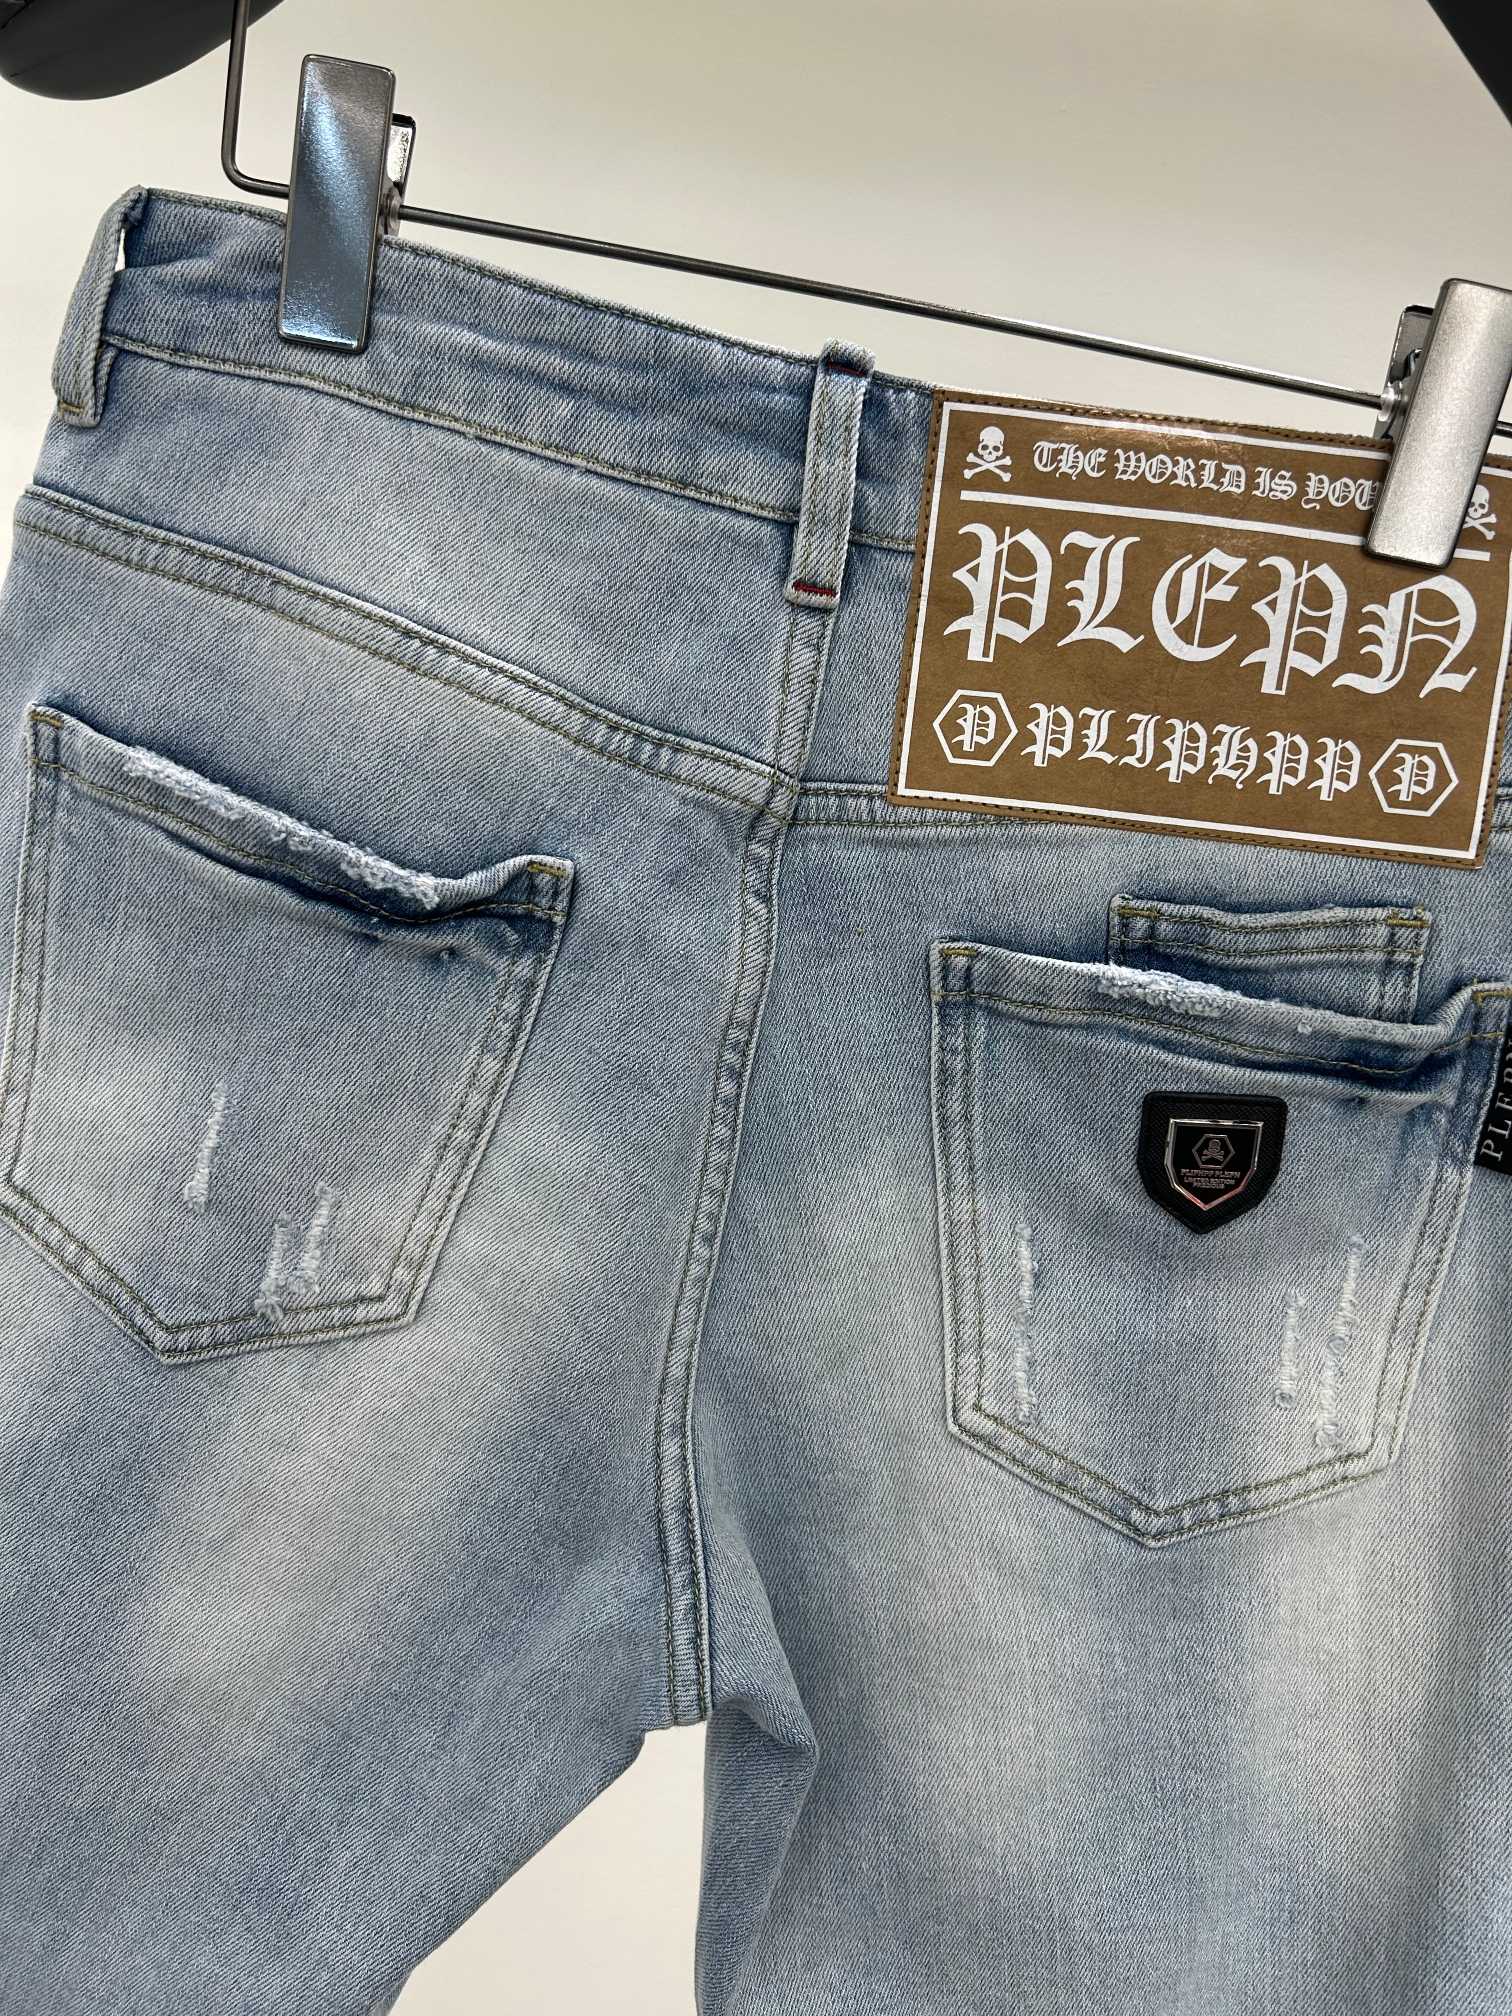 PLIPHPPPLEPN2024新款PP牛仔裤高品质狠货2024SS新品火爆上市啦顶尖时尚潮流狠货码数: